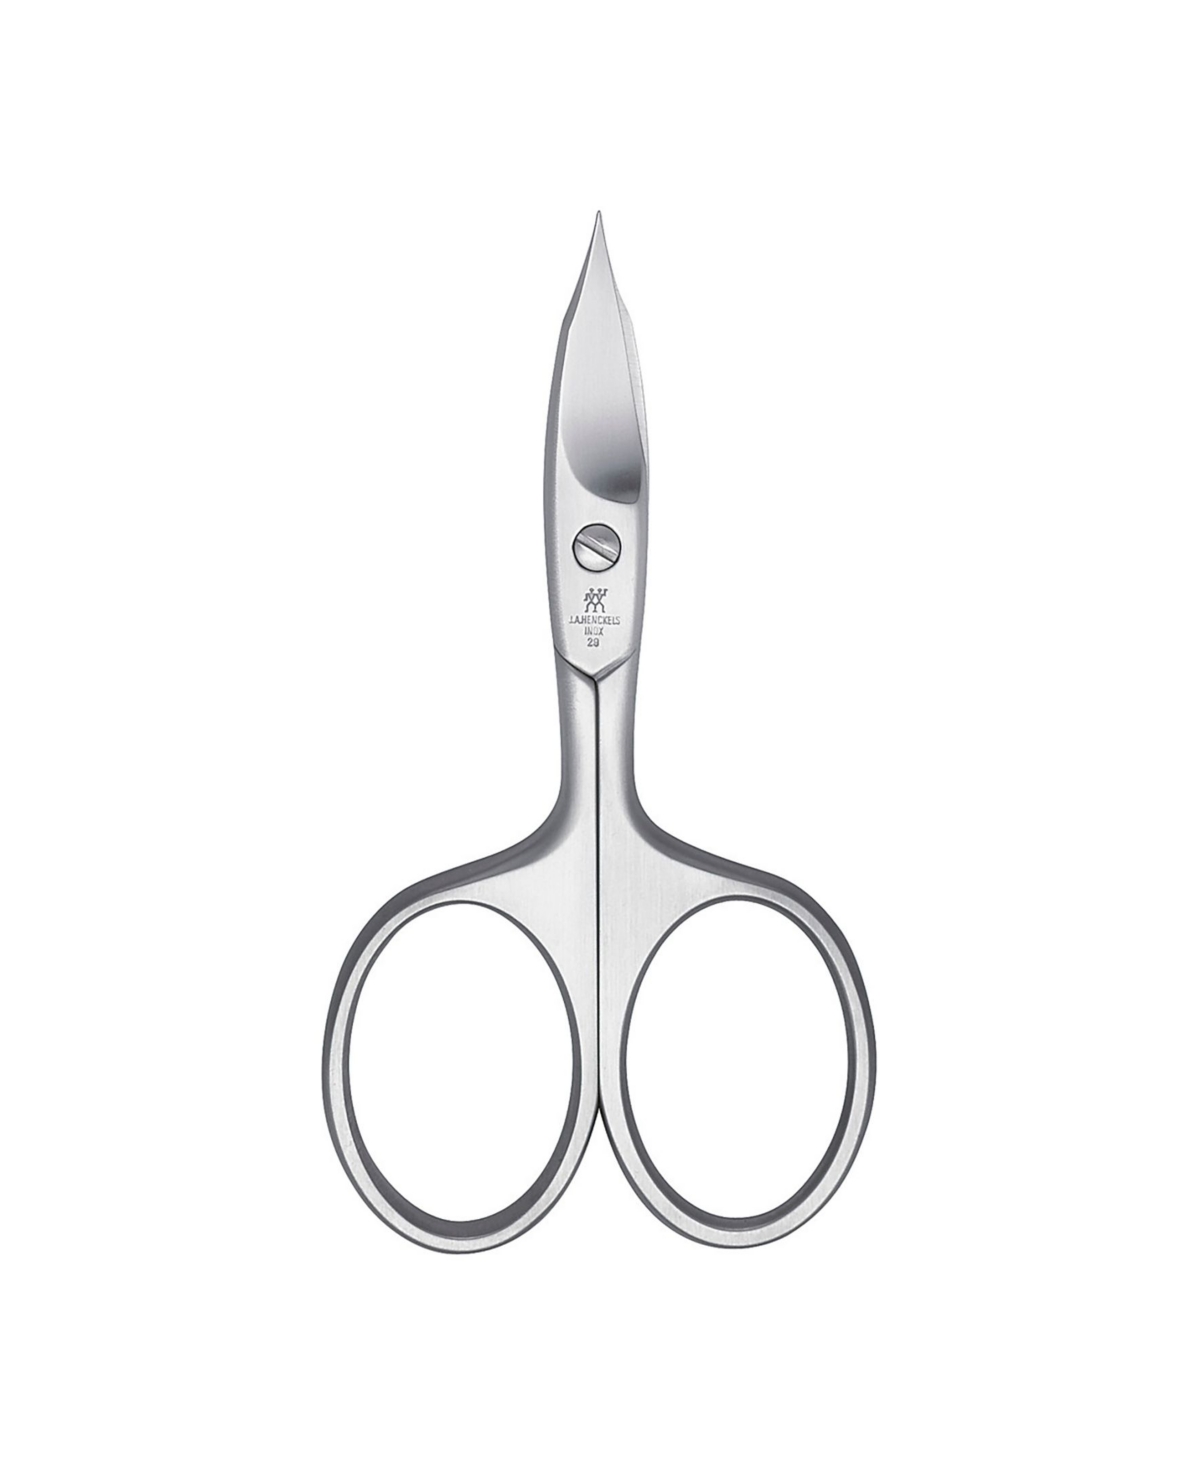 Beauty Twinox Nail Scissors - Silver-tone